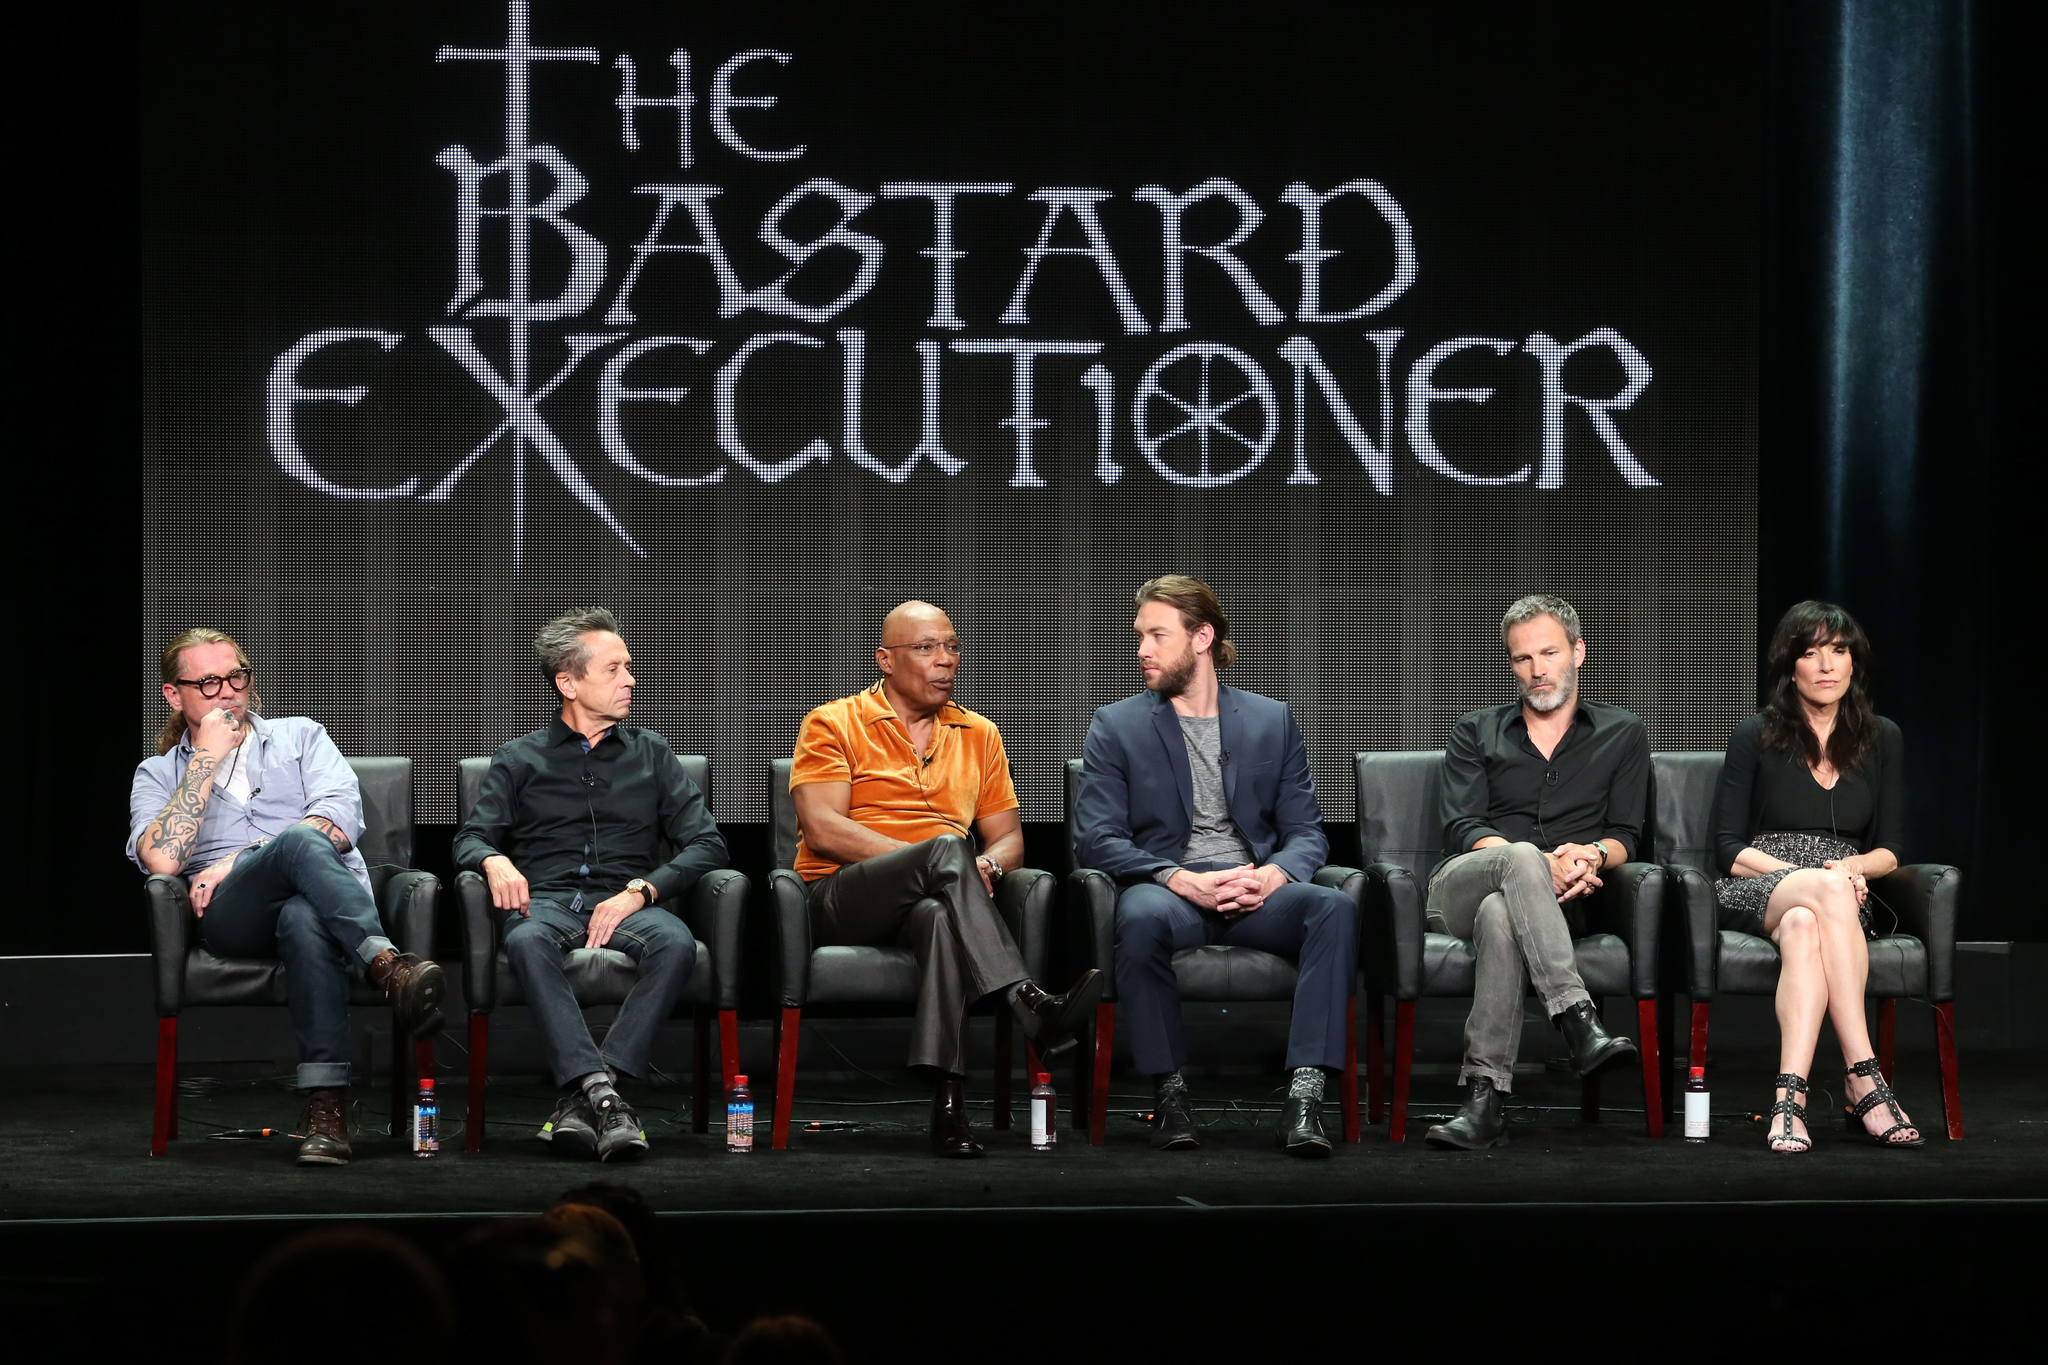 Brian Grazer, Katey Sagal, Paris Barclay, Stephen Moyer, Kurt Sutter and Lee Jones at event of The Bastard Executioner (2015)